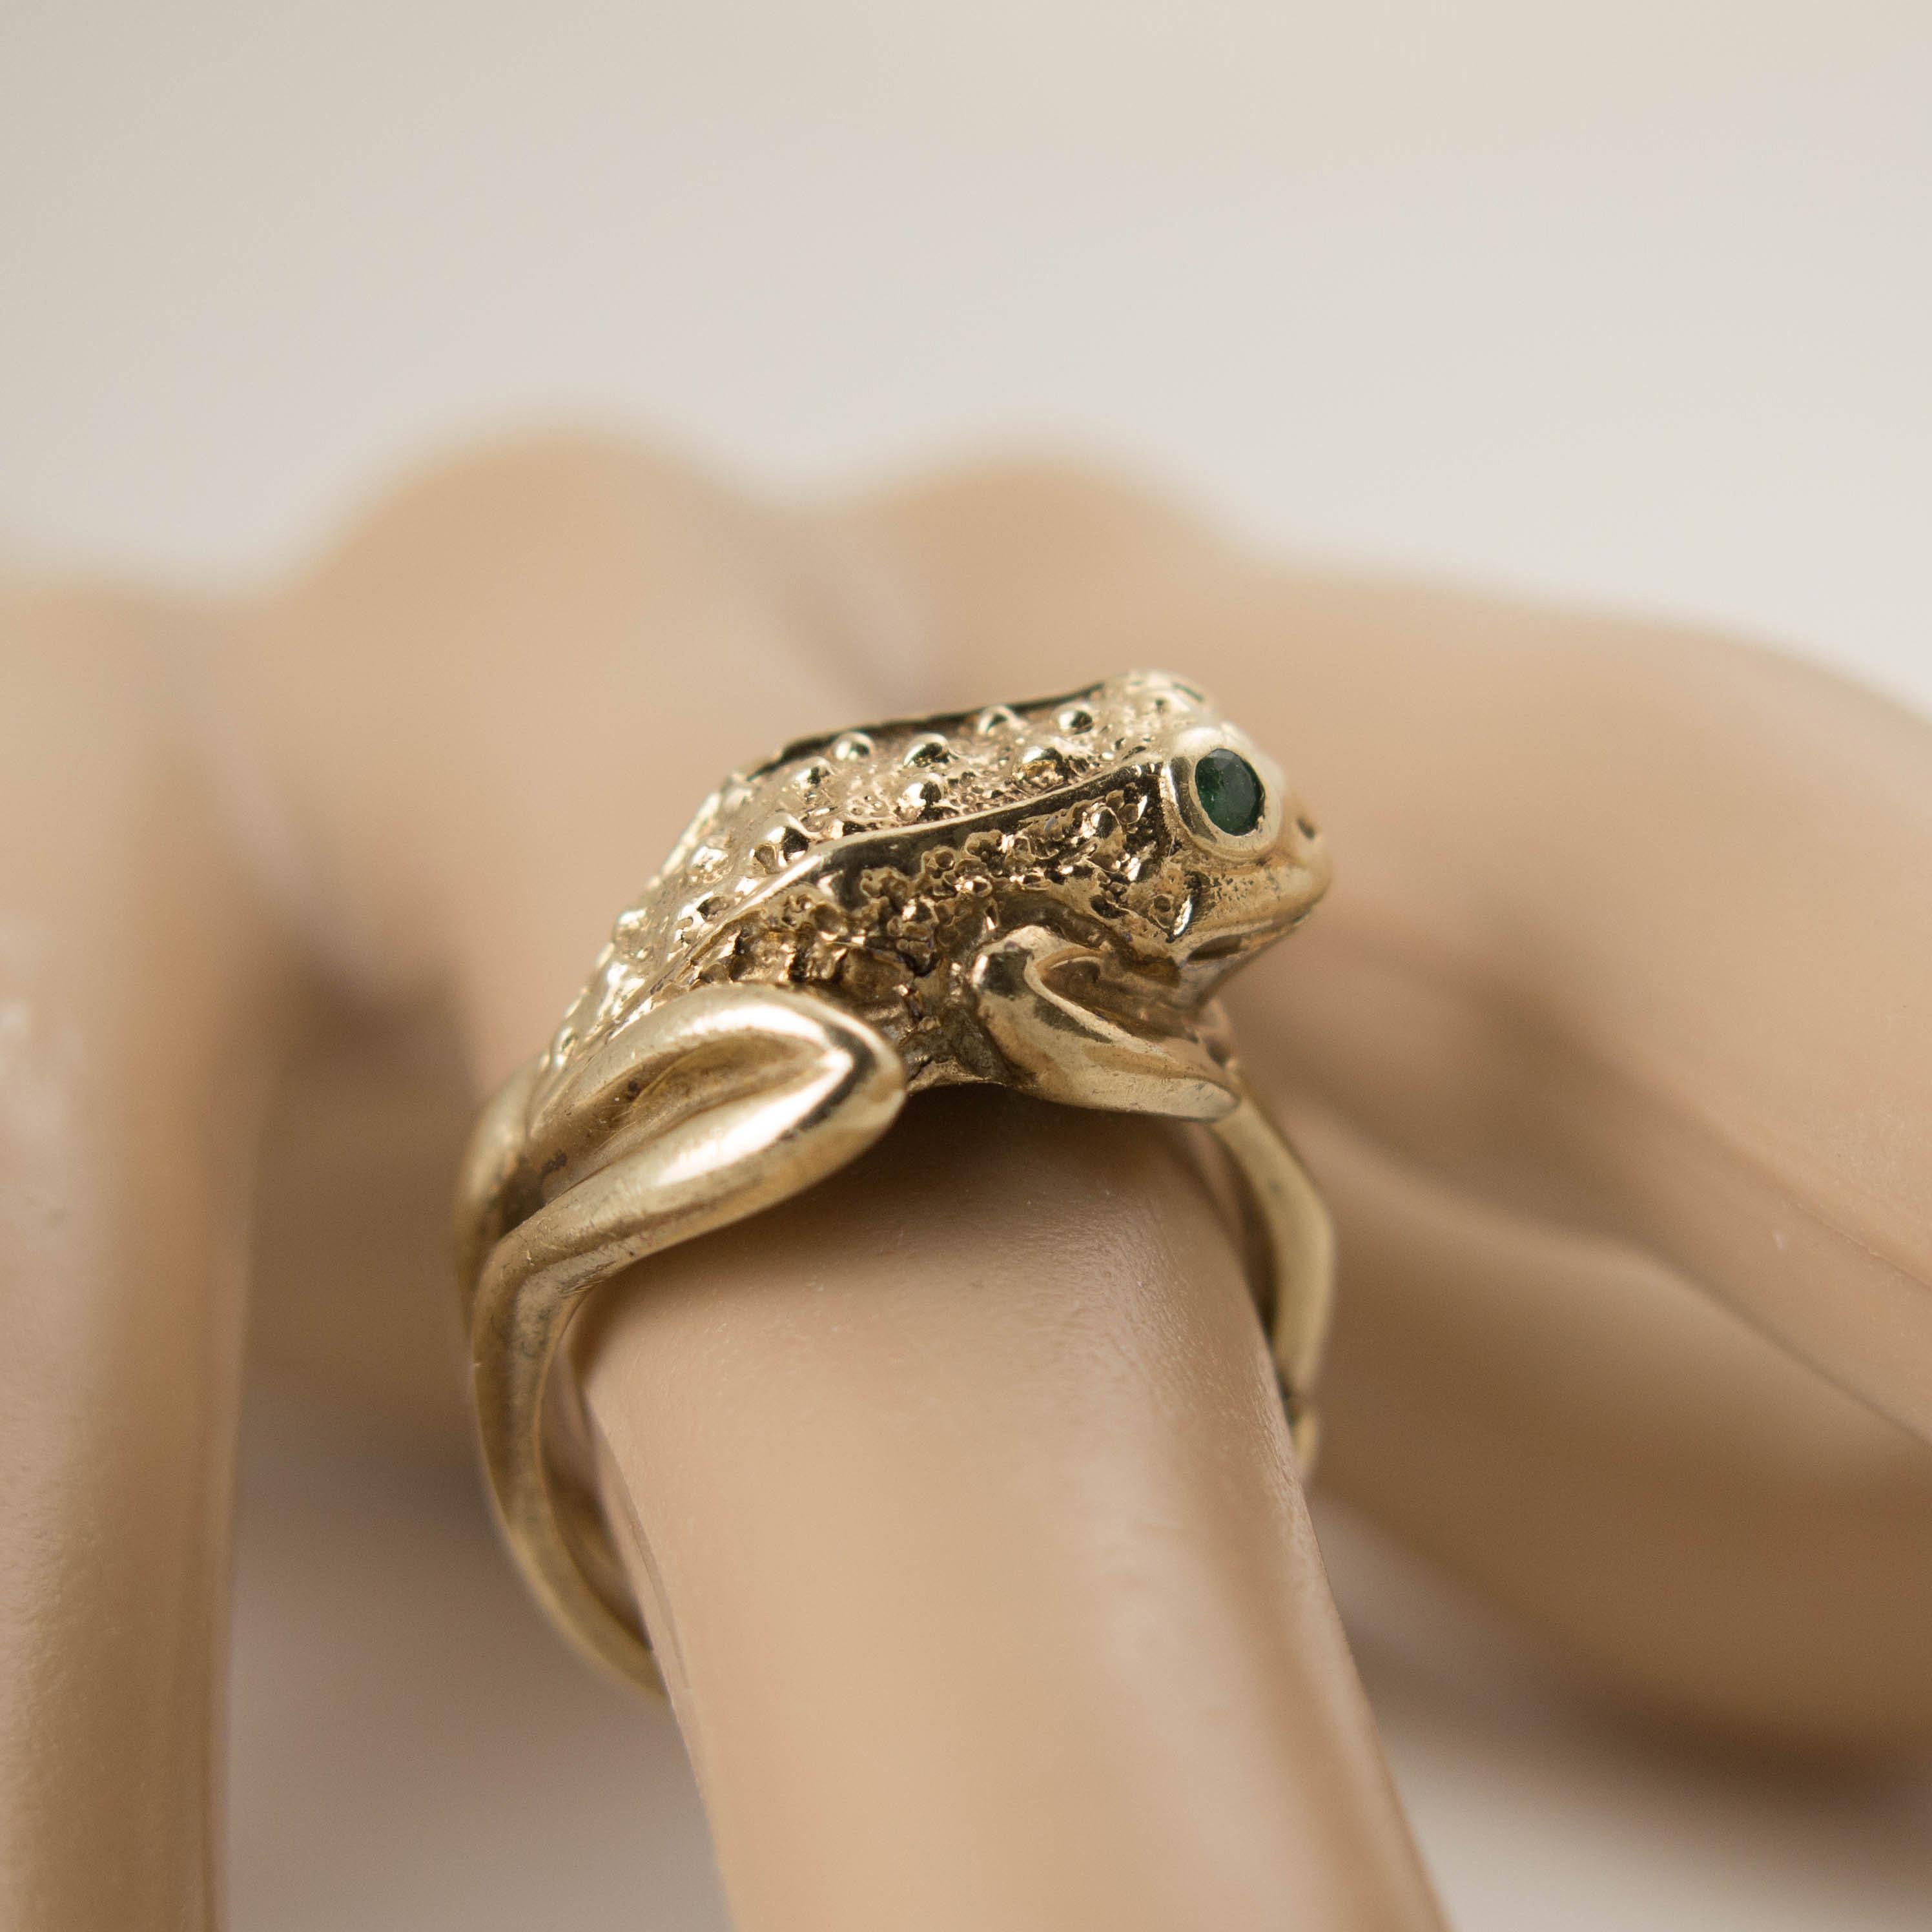 Vintage 14 Karat Gold Frog Ring with Emerald Eyes 3